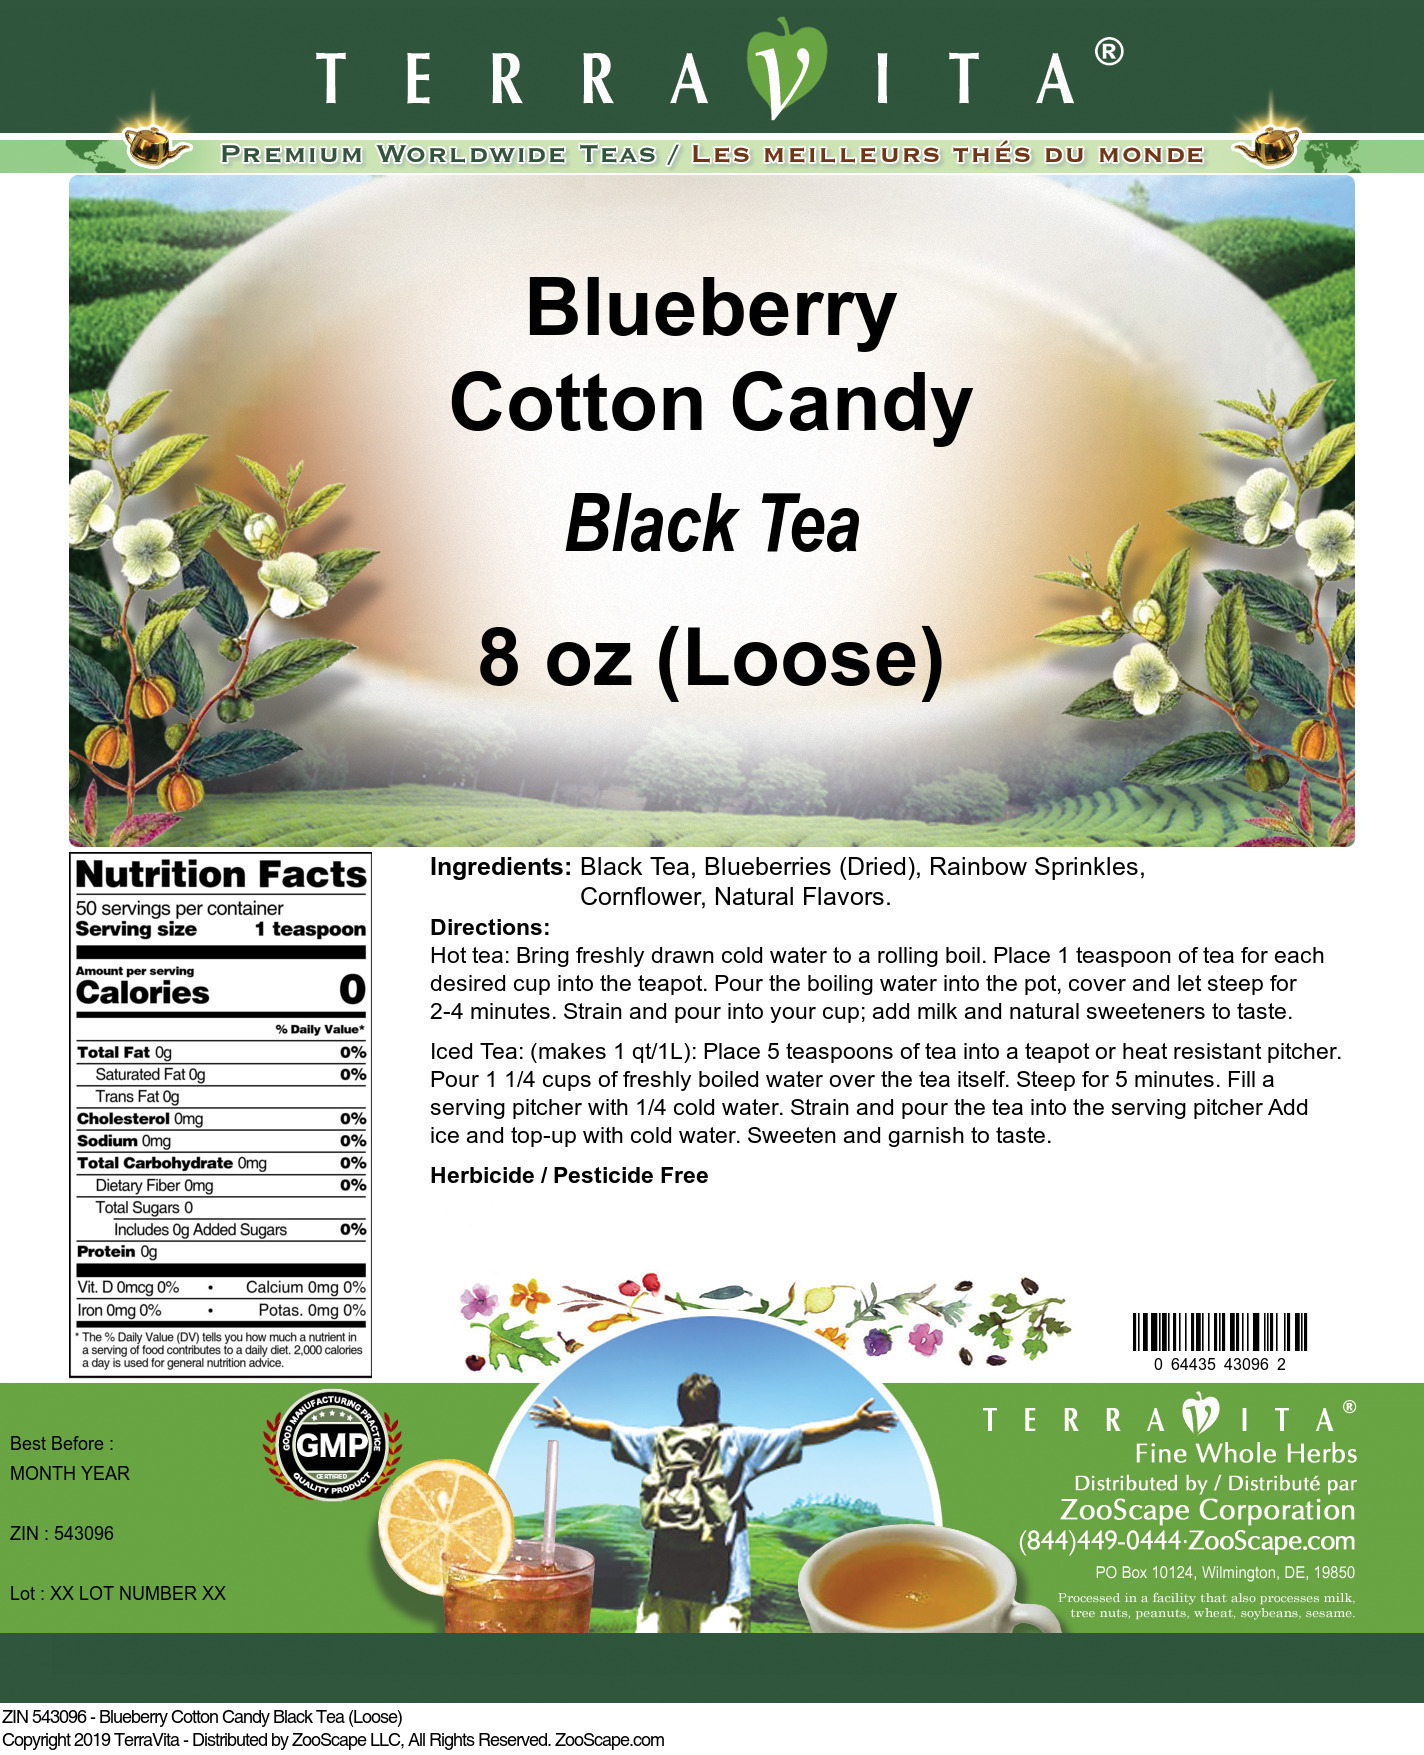 Blueberry Cotton Candy Black Tea (Loose) - Label